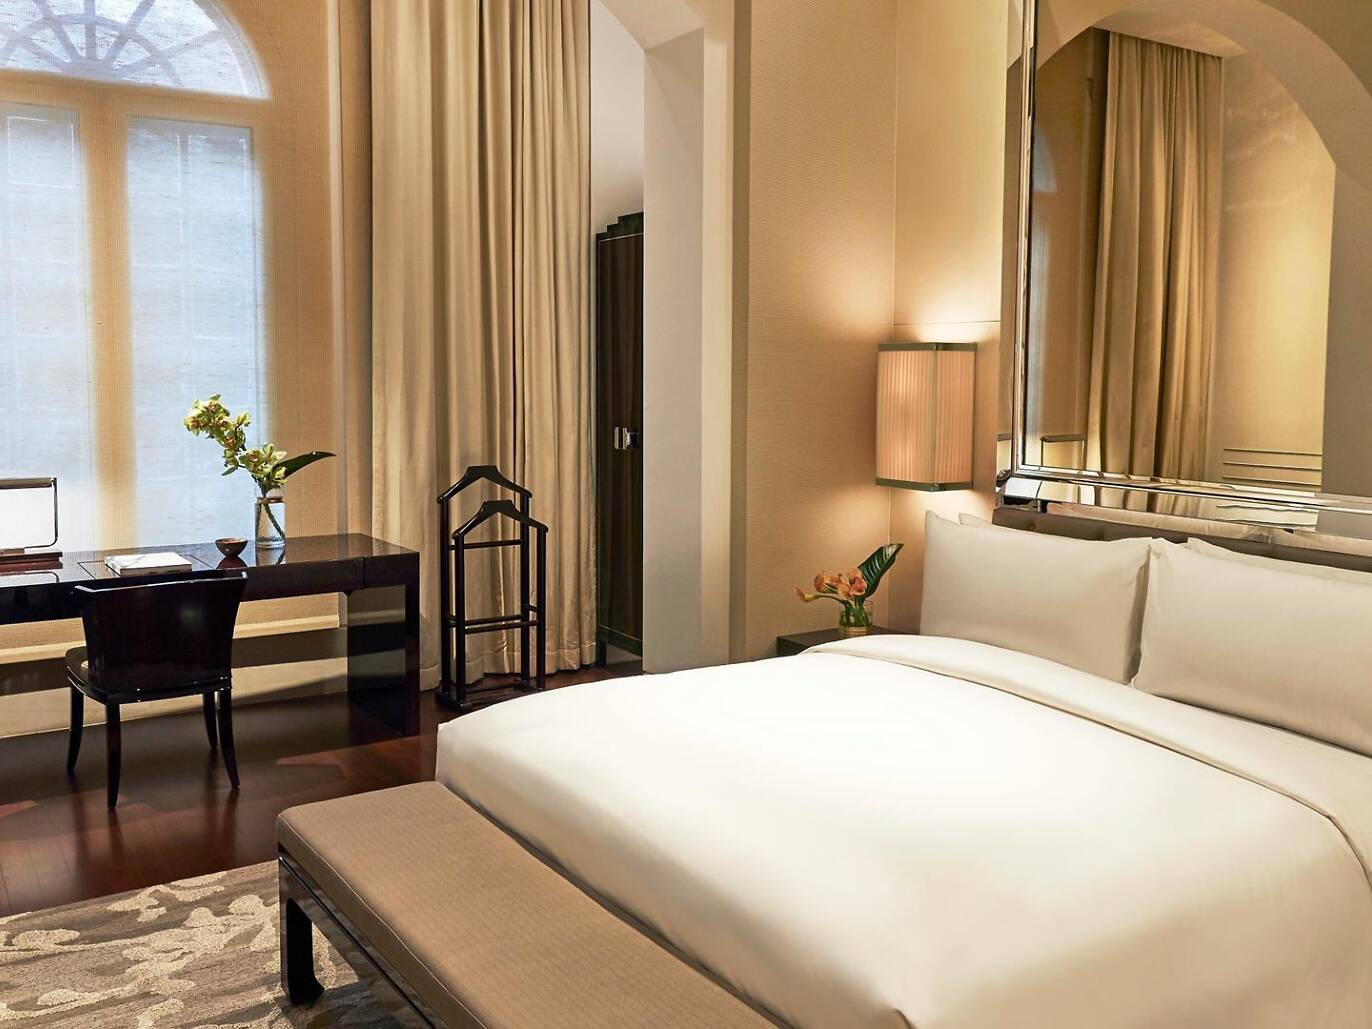 20 Best Luxury Hotels In Singapore | Best Five-Star Hotels In Singapore